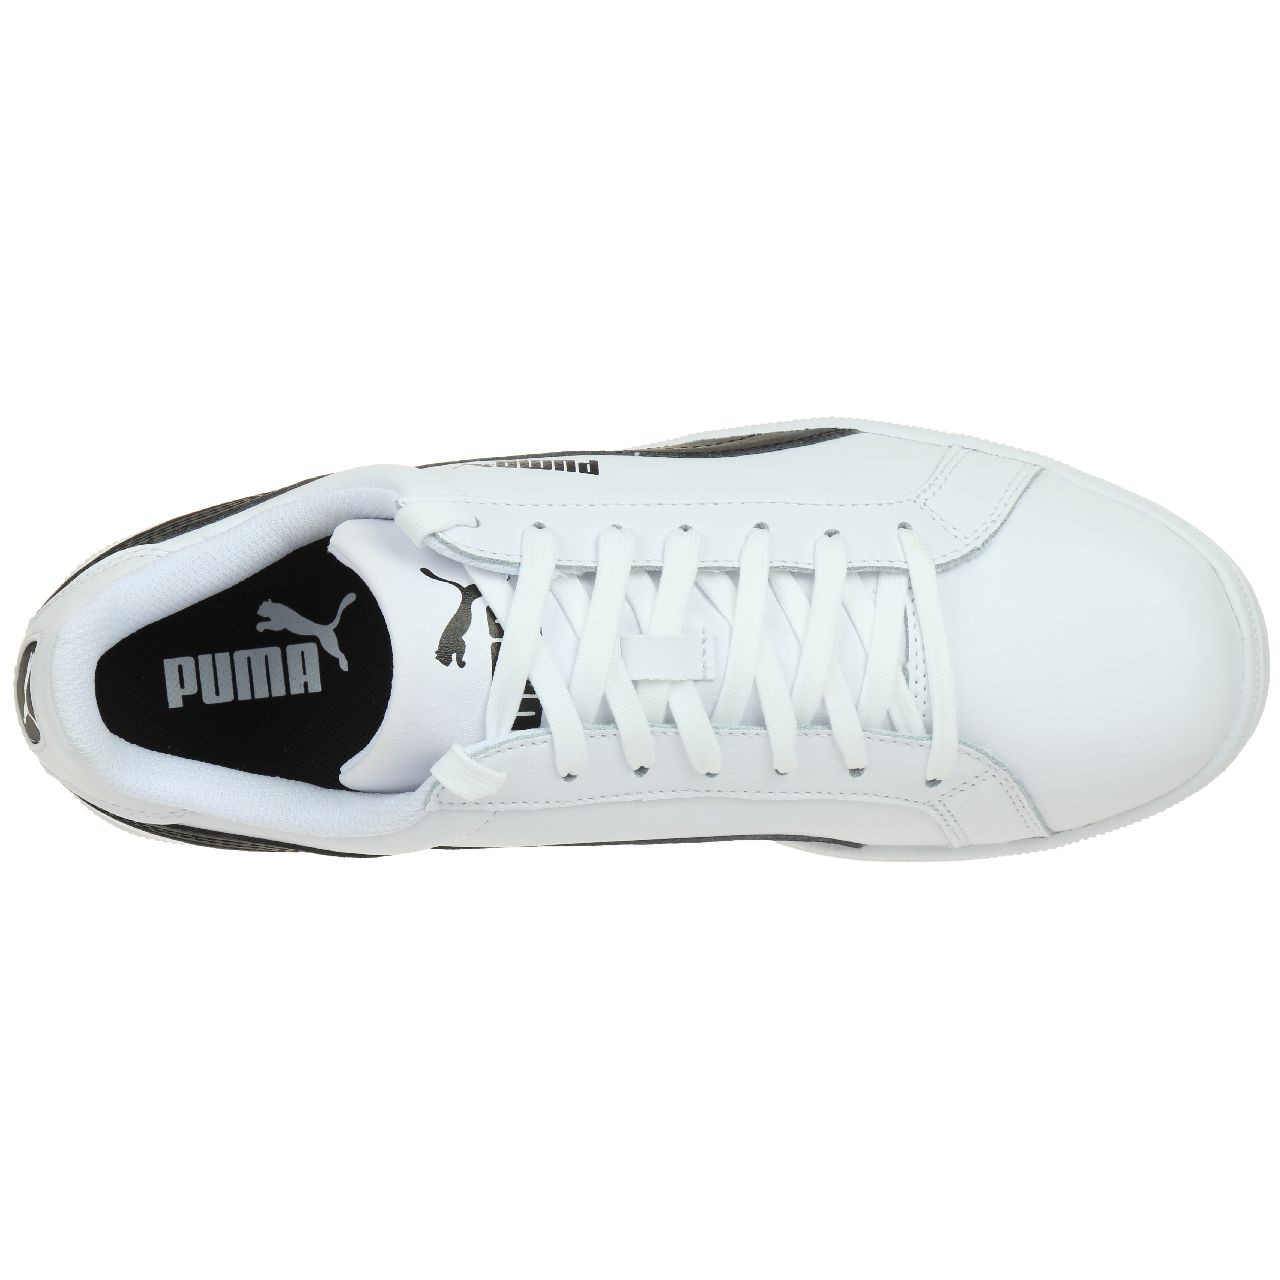 Puma Smash L Herren Sneaker Schuhe Leder weiß 356722 11